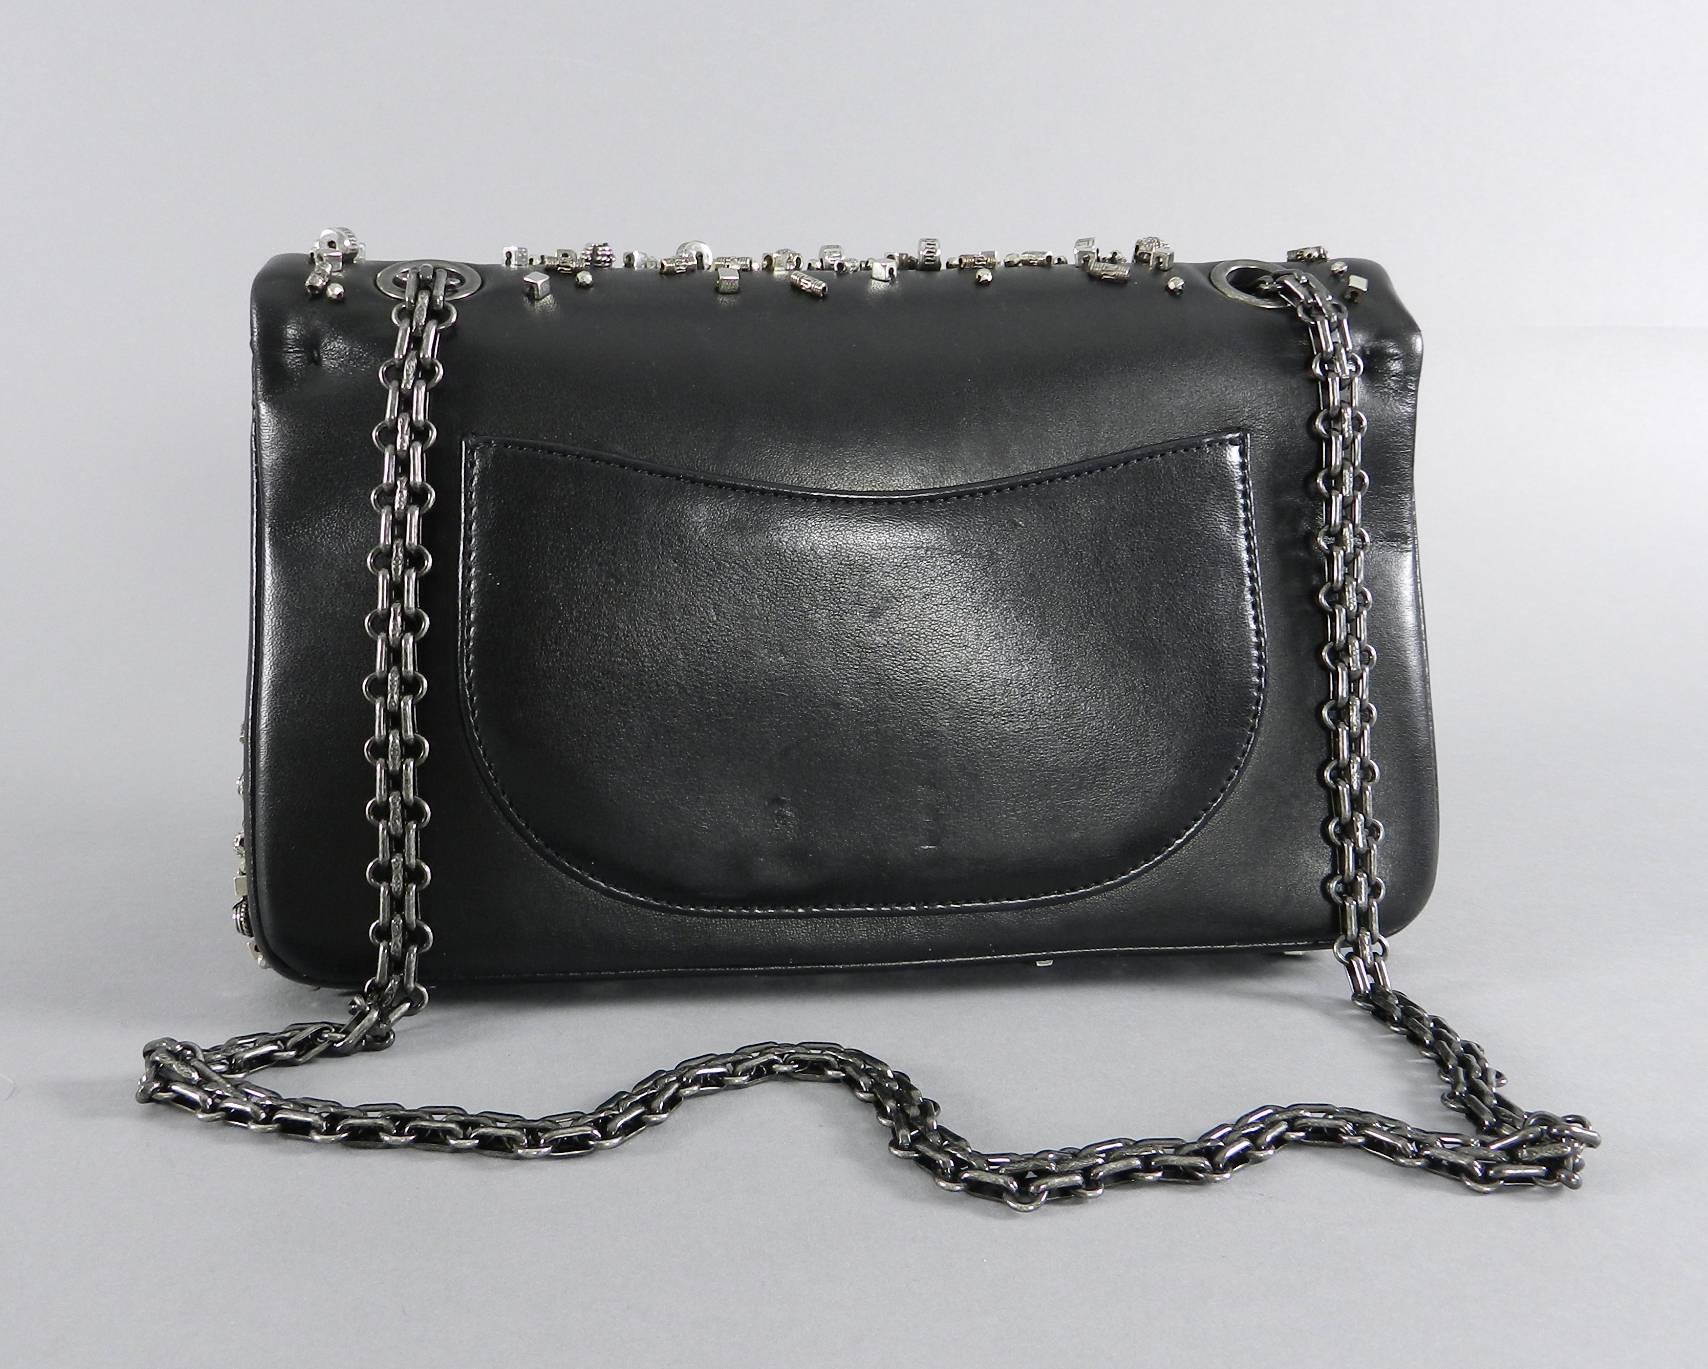 Black Chanel Bombay 2012 Runway Silver Beaded bag 2.55 medium reissue